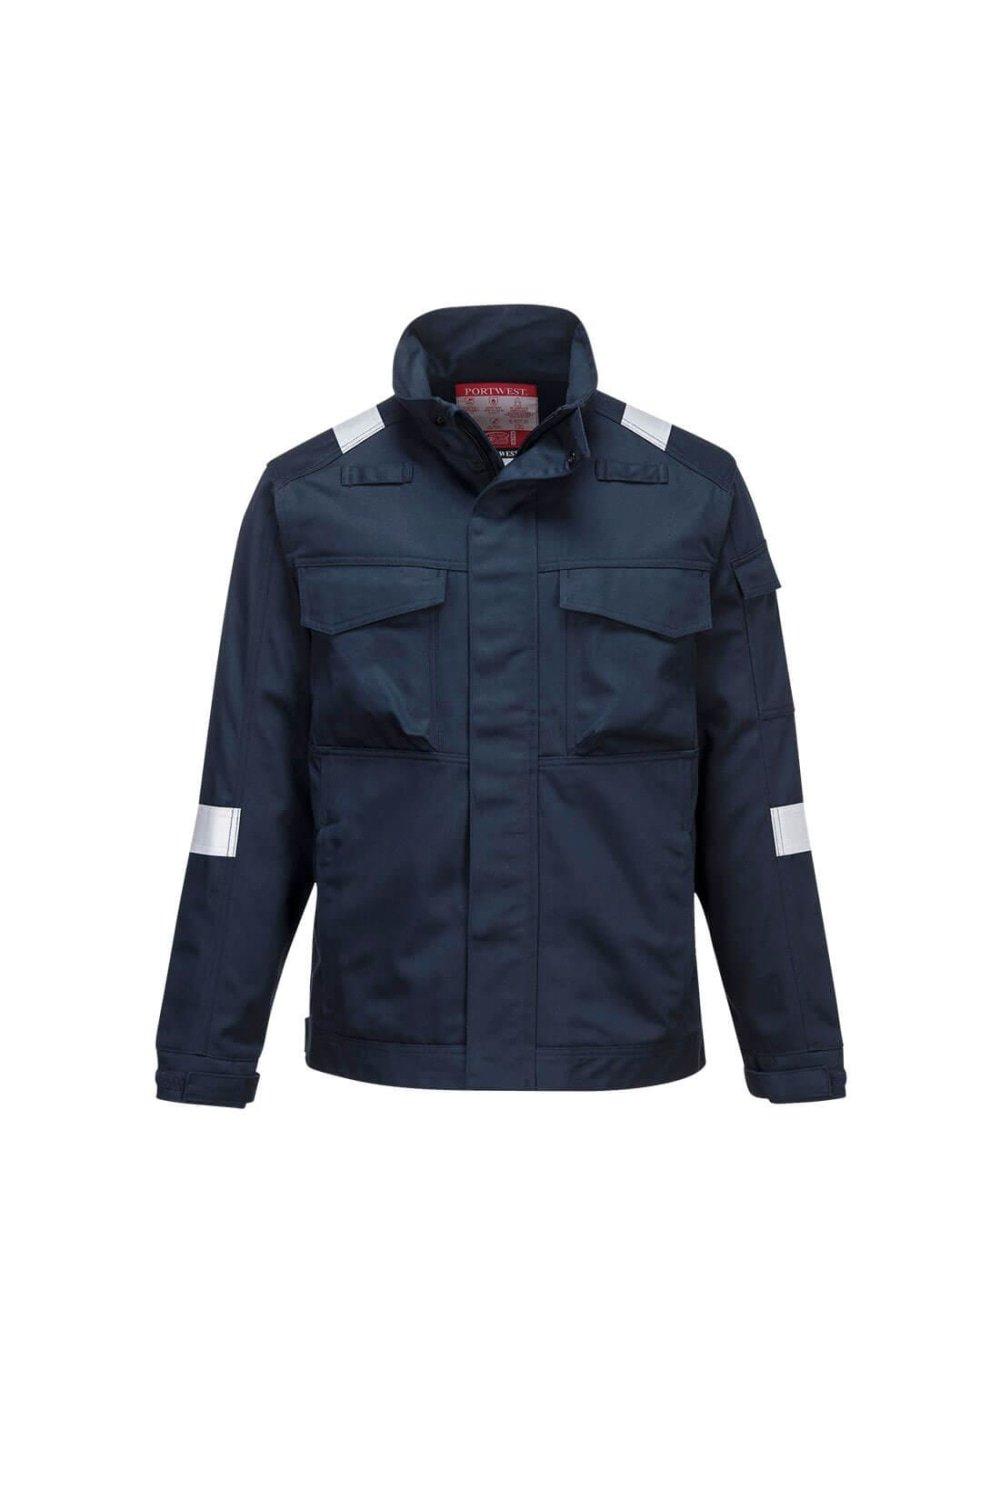 Куртка FR68 Bizflame Ultra Portwest, темно-синий